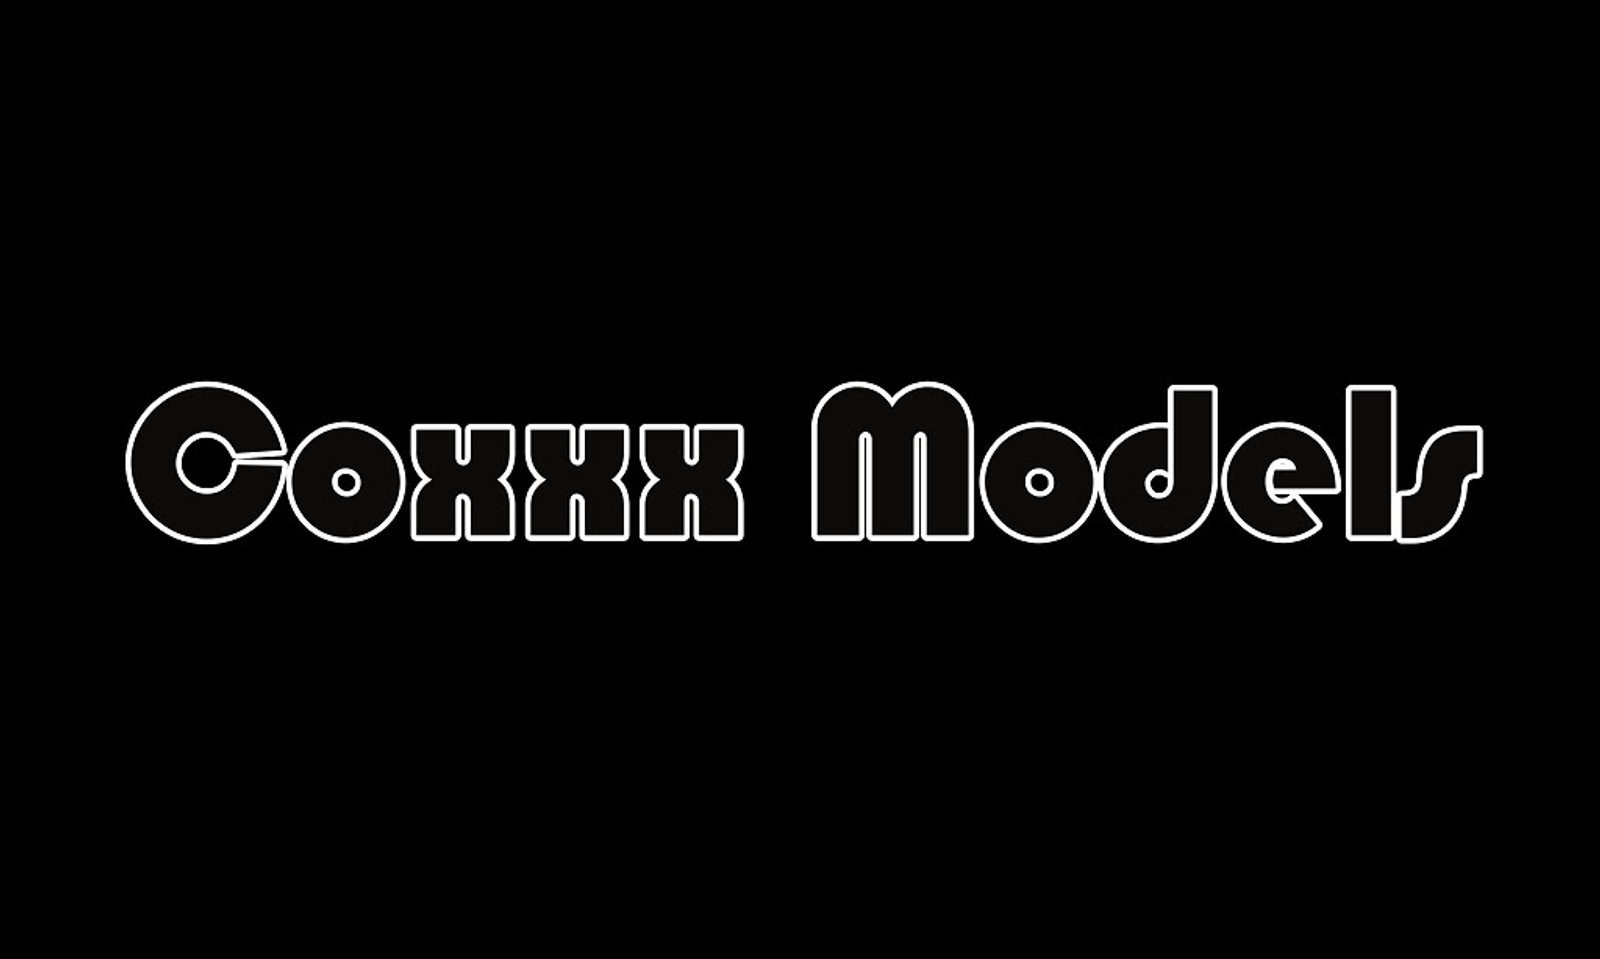 Coxxx Models Announces Slate of Talent Headed to Exxxotica Miami